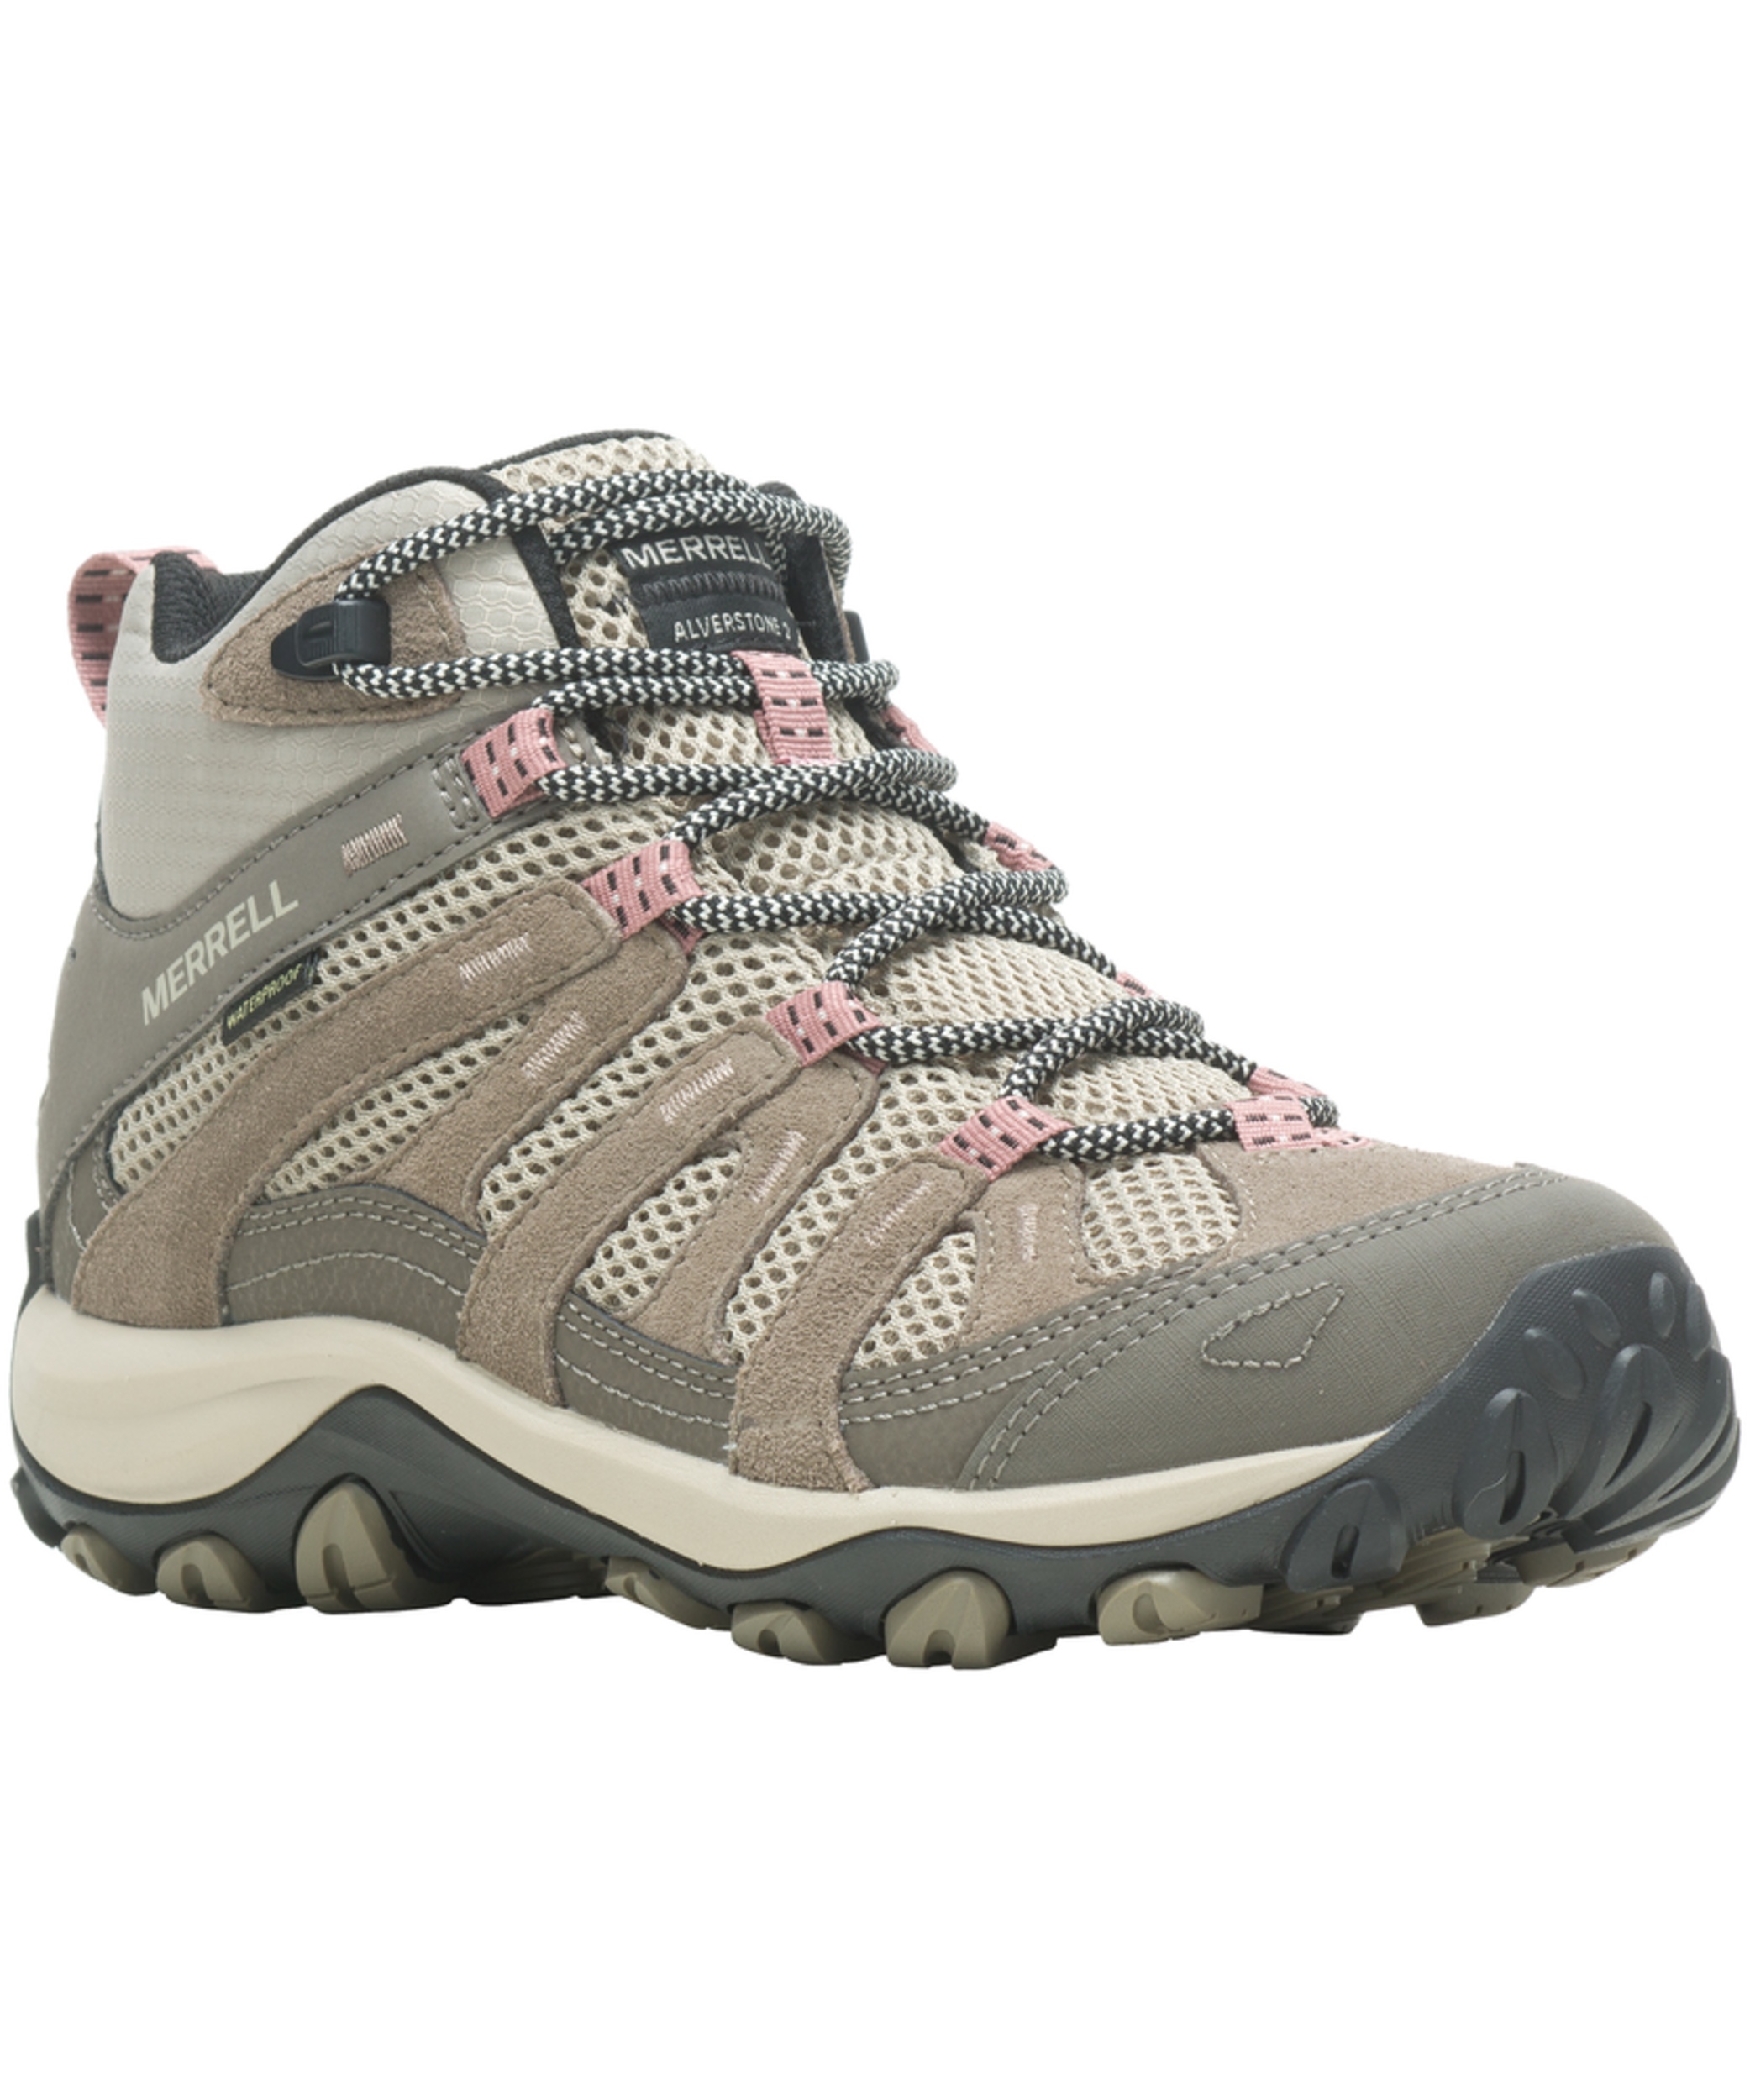 Merrell Women's Alverstone 2 Waterproof Mid Hiking Boots | Marks